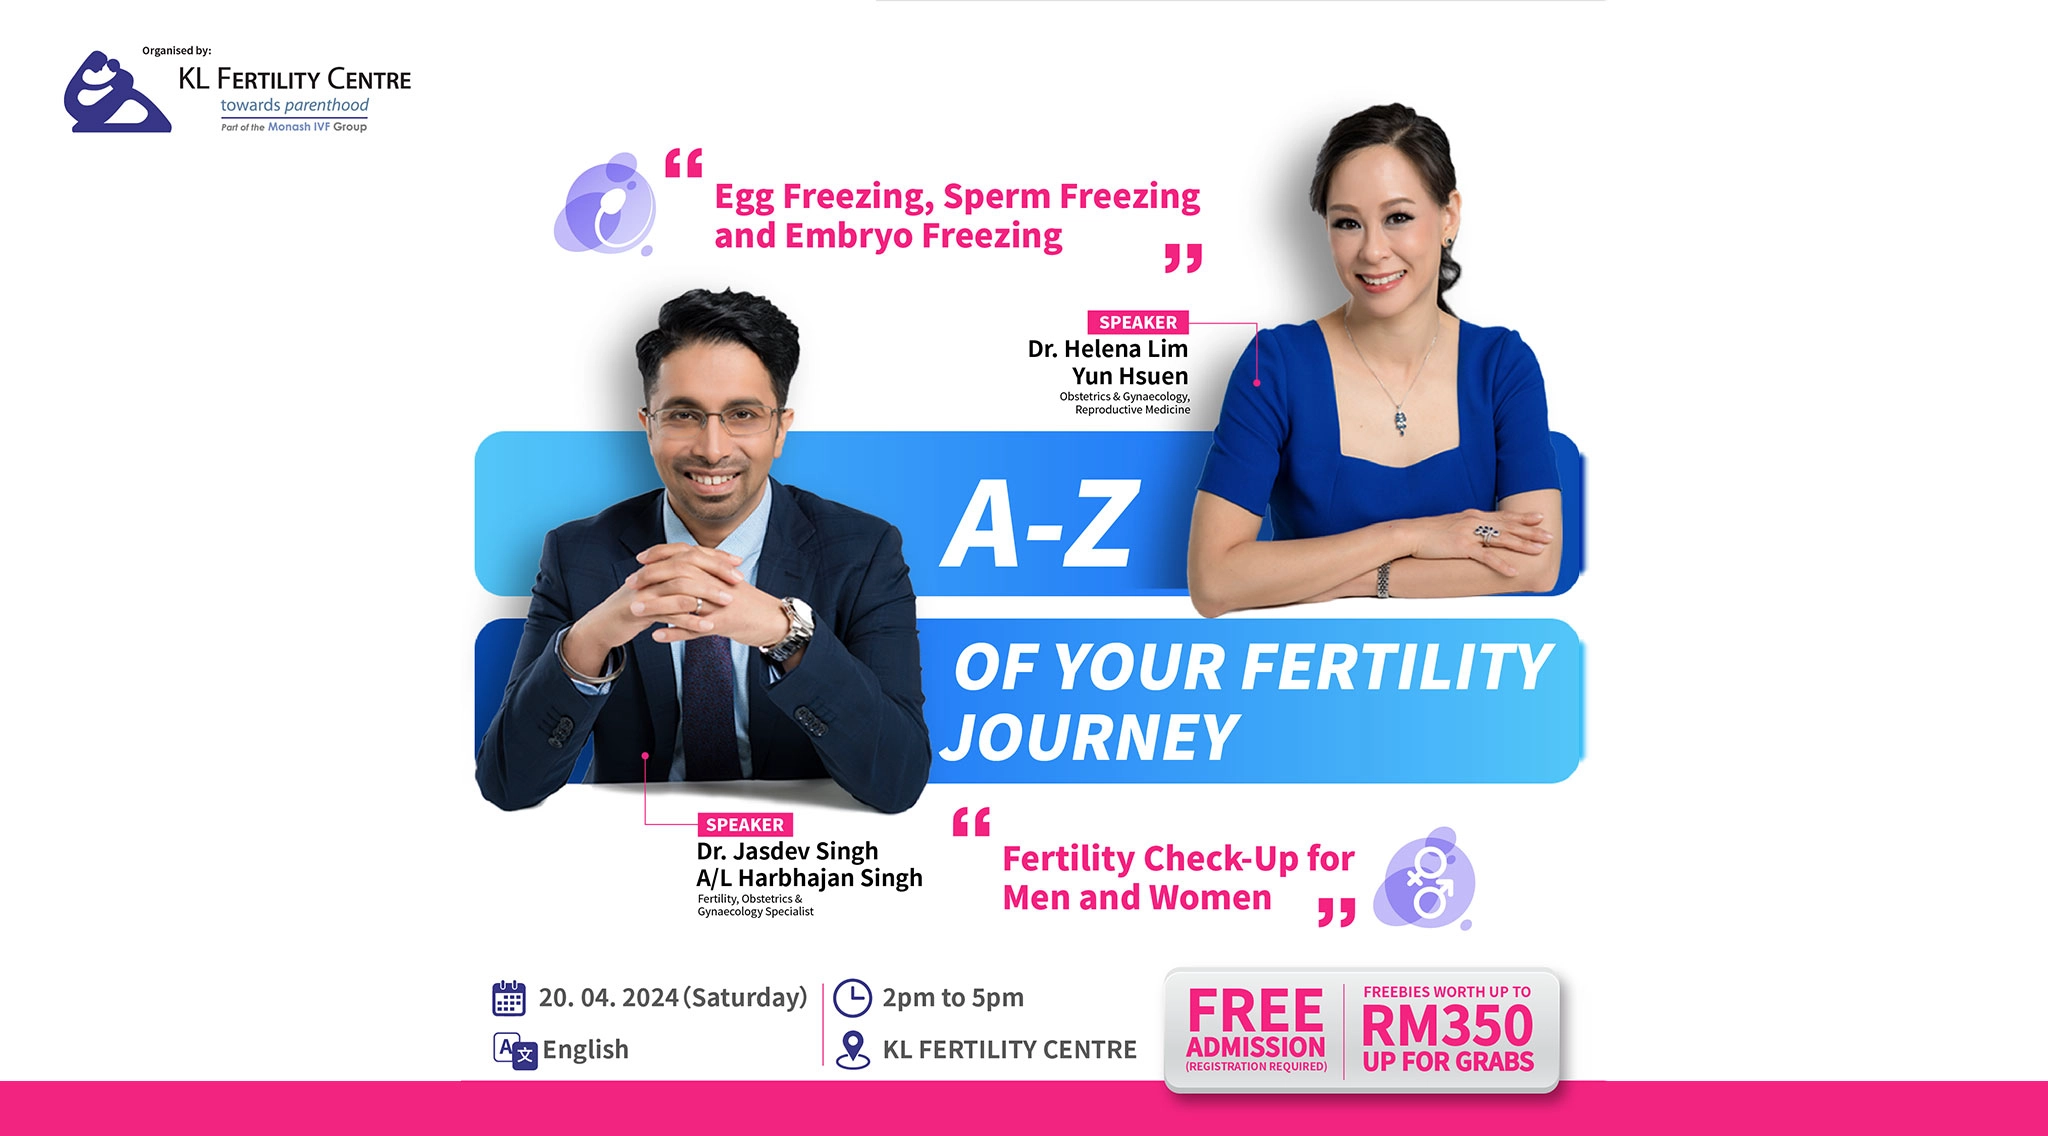 Fertility Forum April 20, 2024 - Dr. Jasdev Singh, Dr. Helena Lim